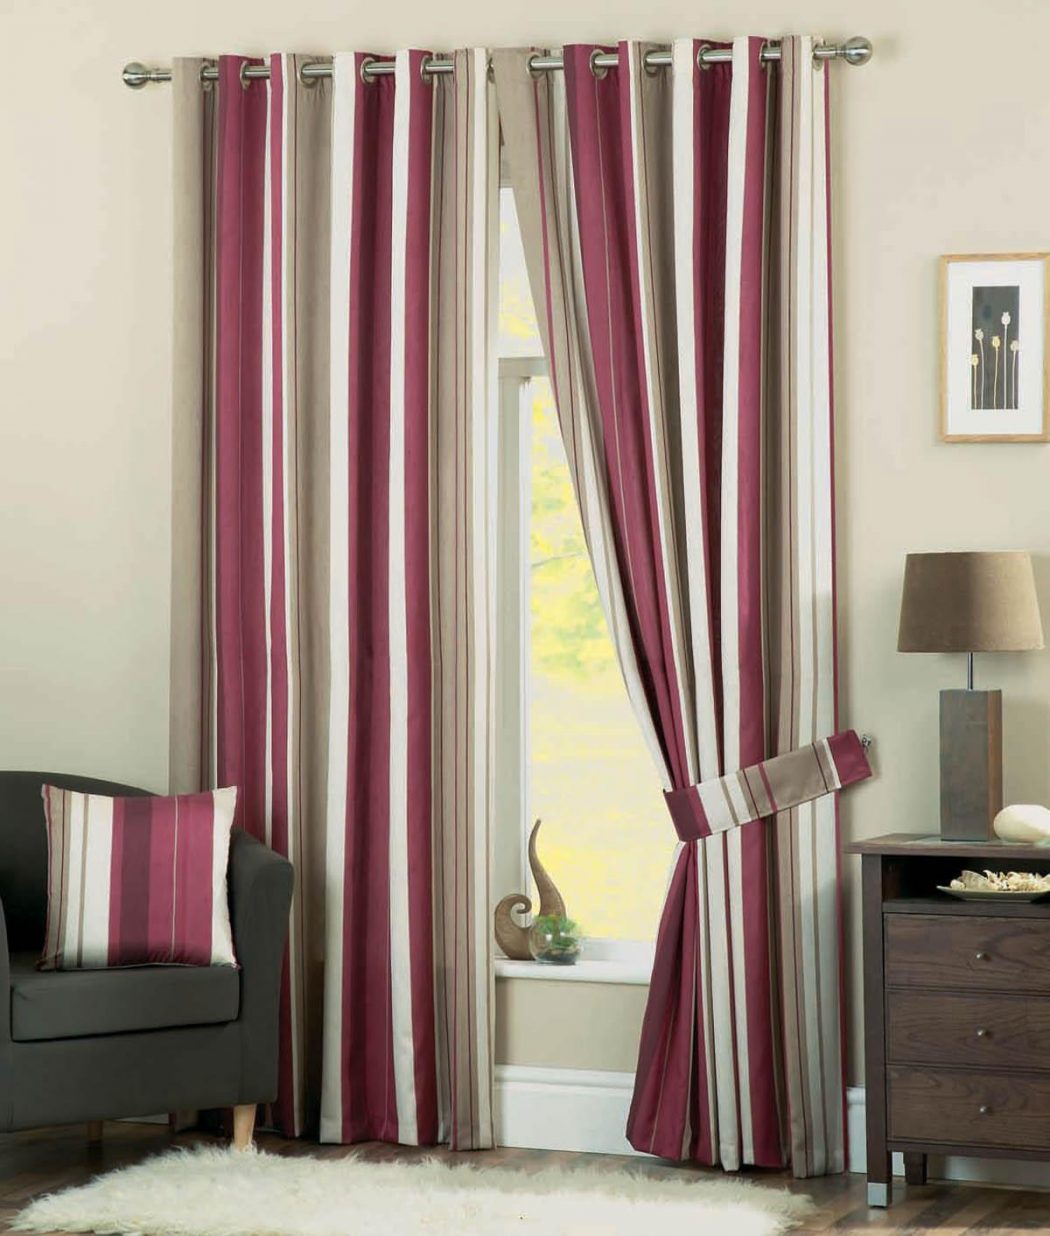 Whitworth Claret 20+ Hottest Curtain Design Ideas - 18